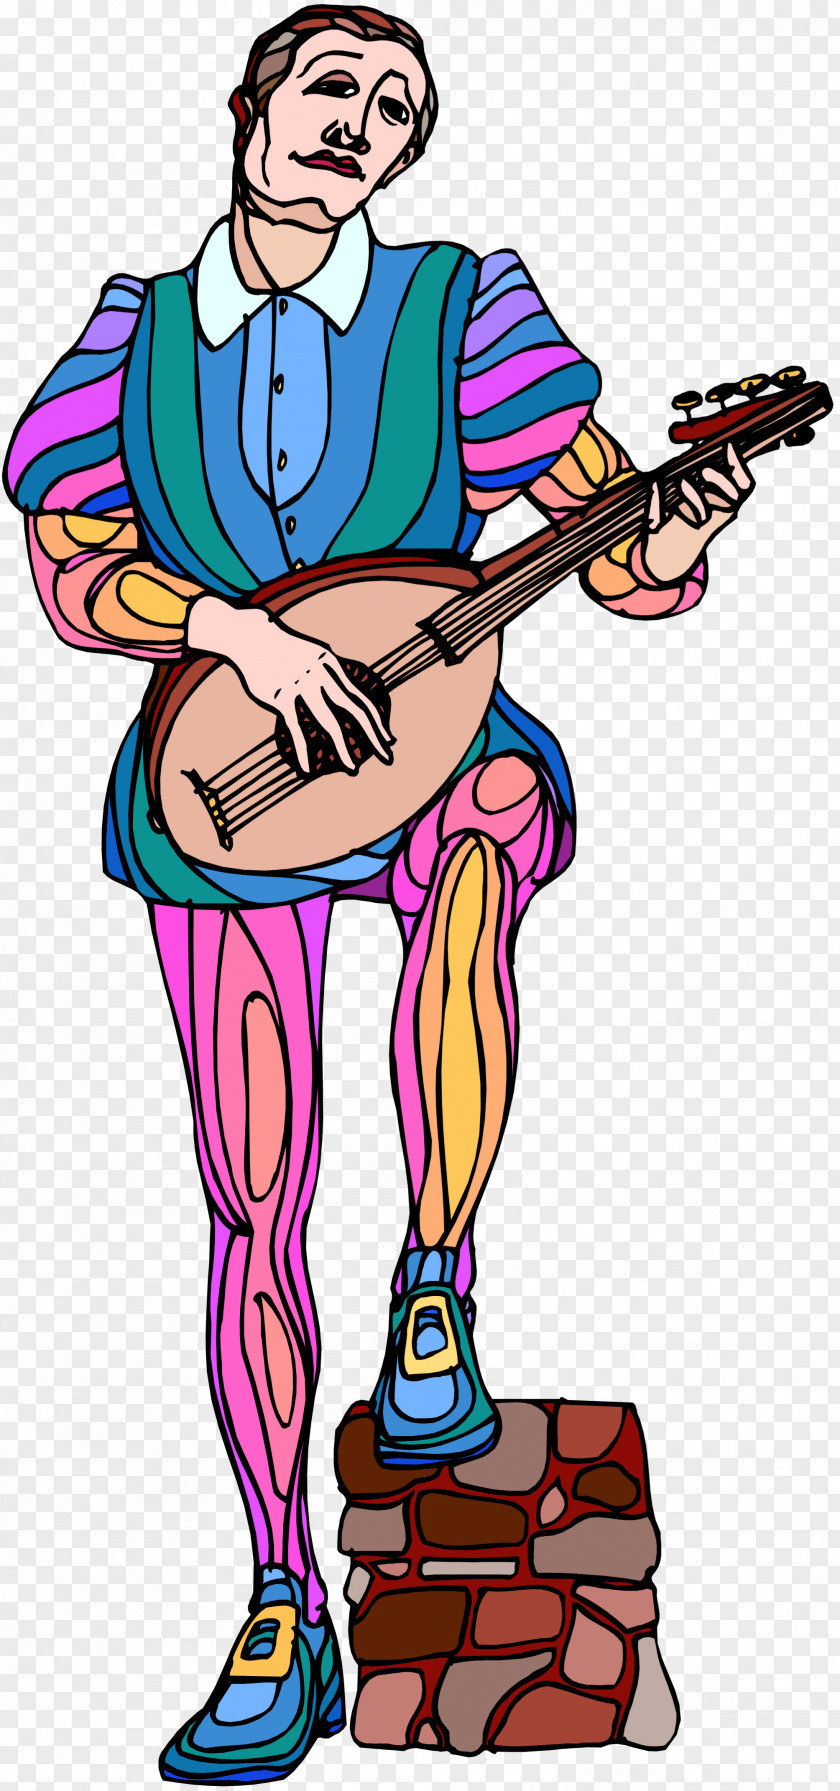 Banjo Guitar Music Artist Cartoon PNG